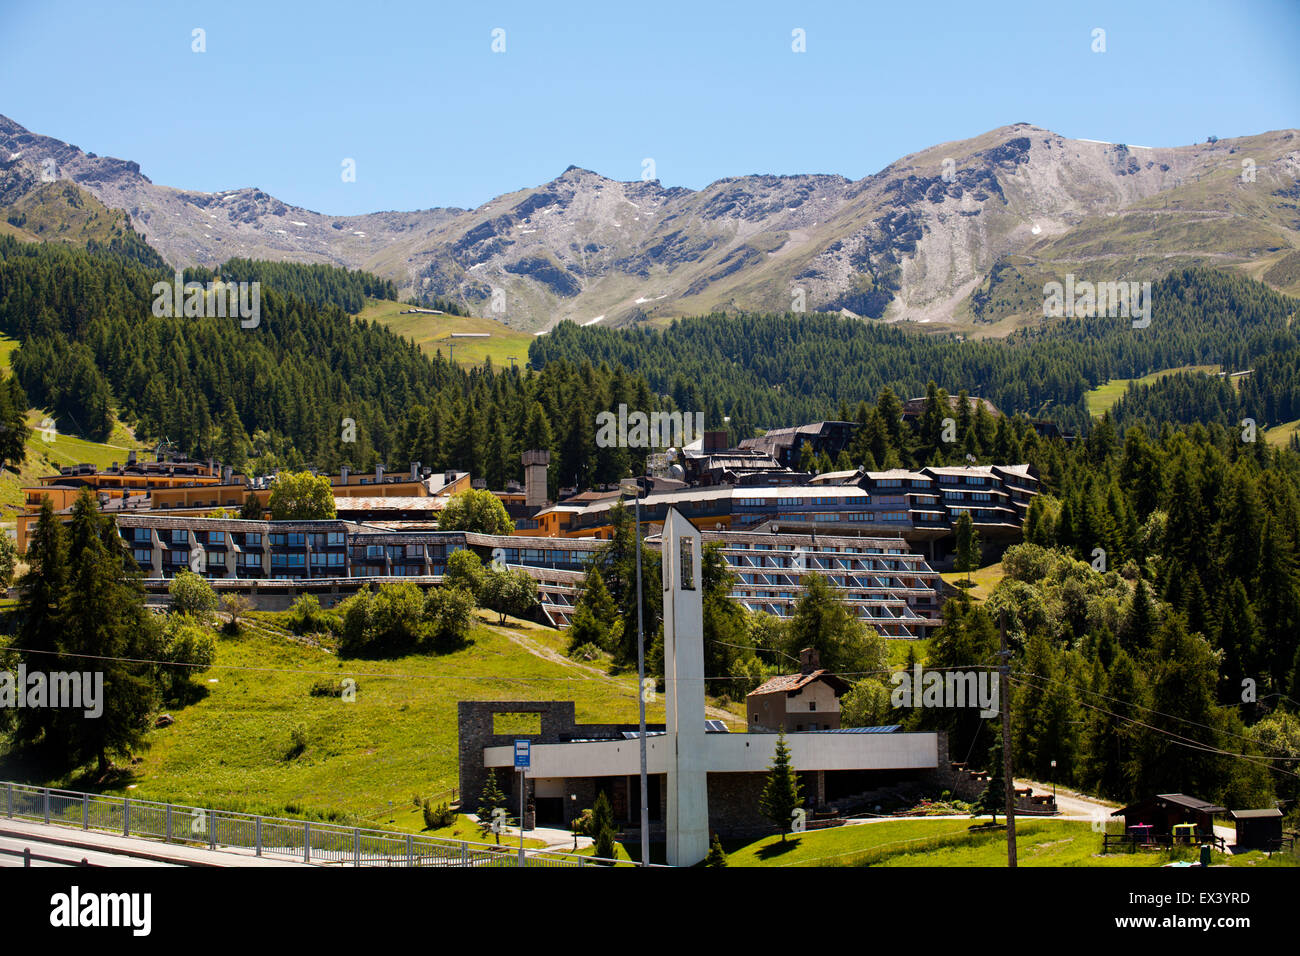 Valtur village in Pila, Aosta, Valle d'Aosta, Italy Stock Photo - Alamy